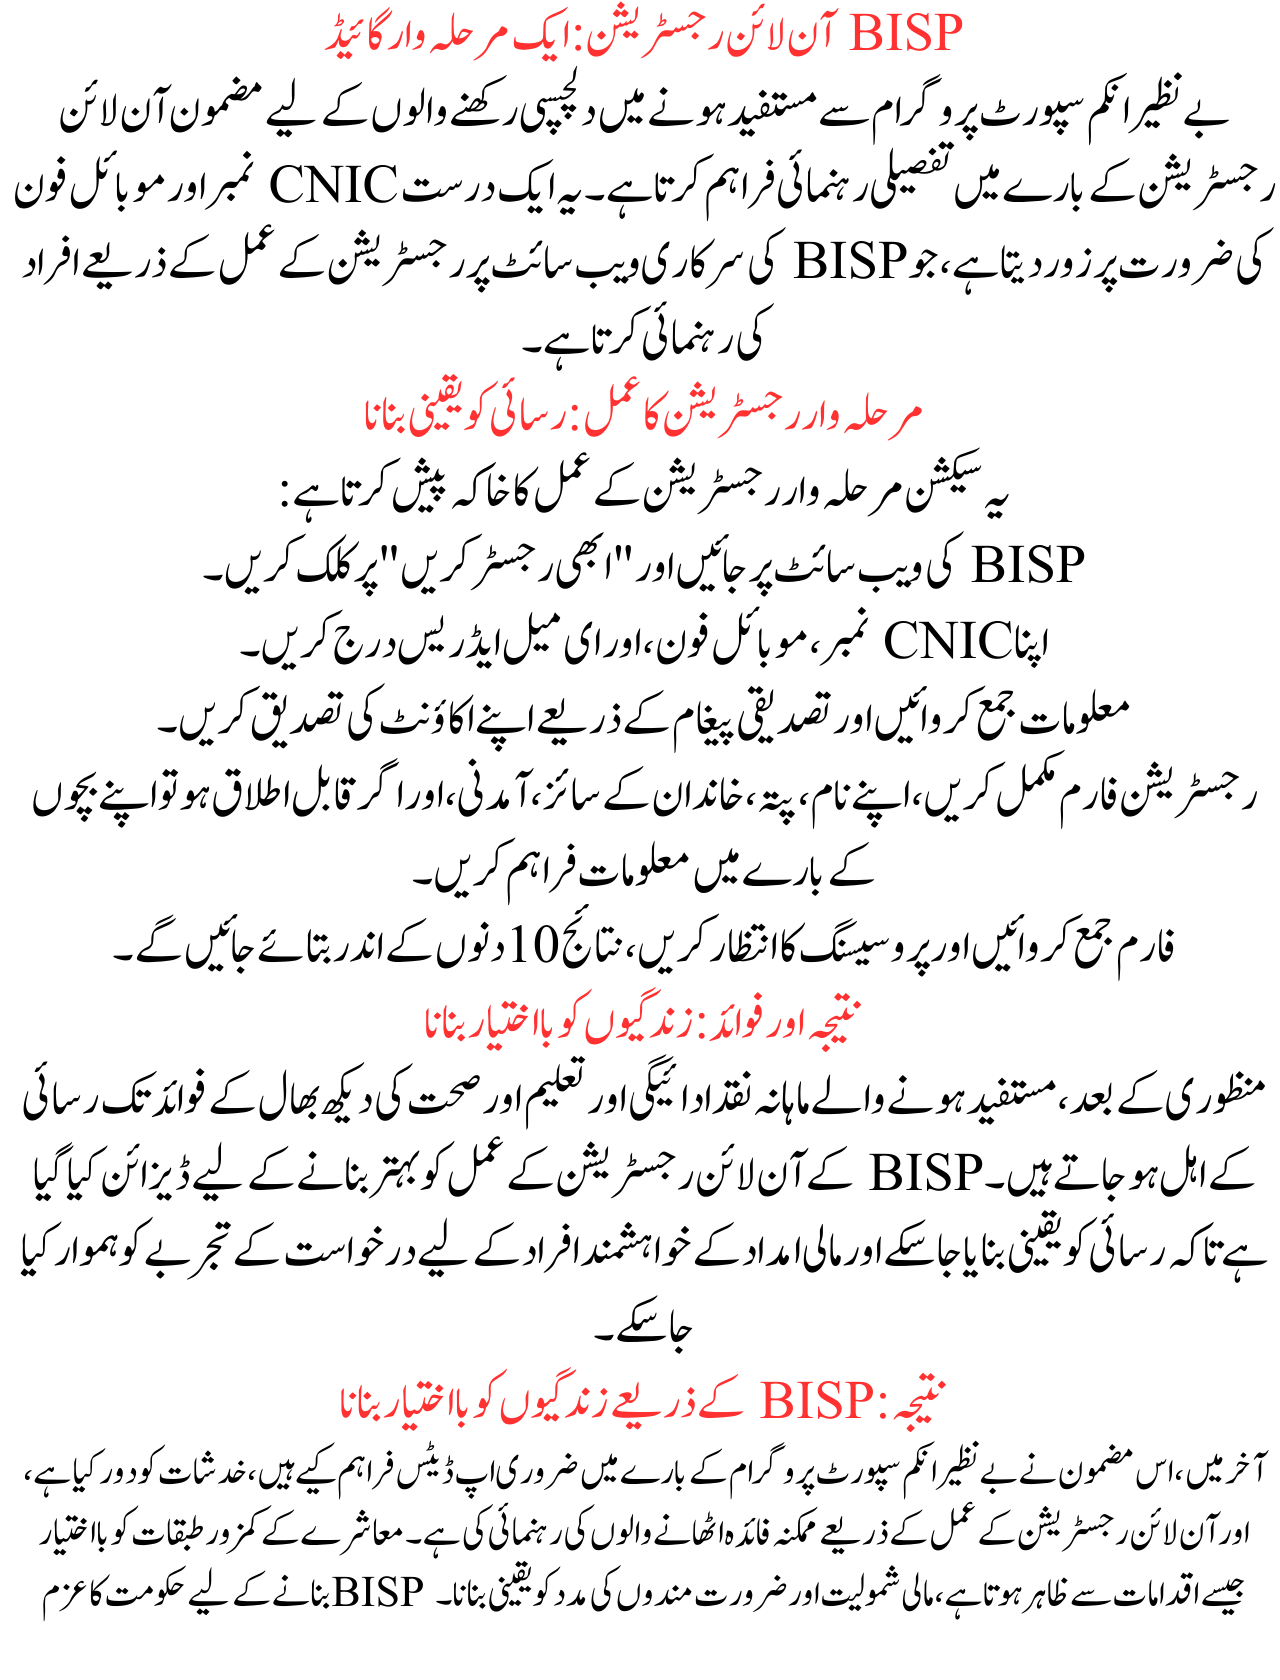 Benazir Income Support Program: Updates on Qist 12000